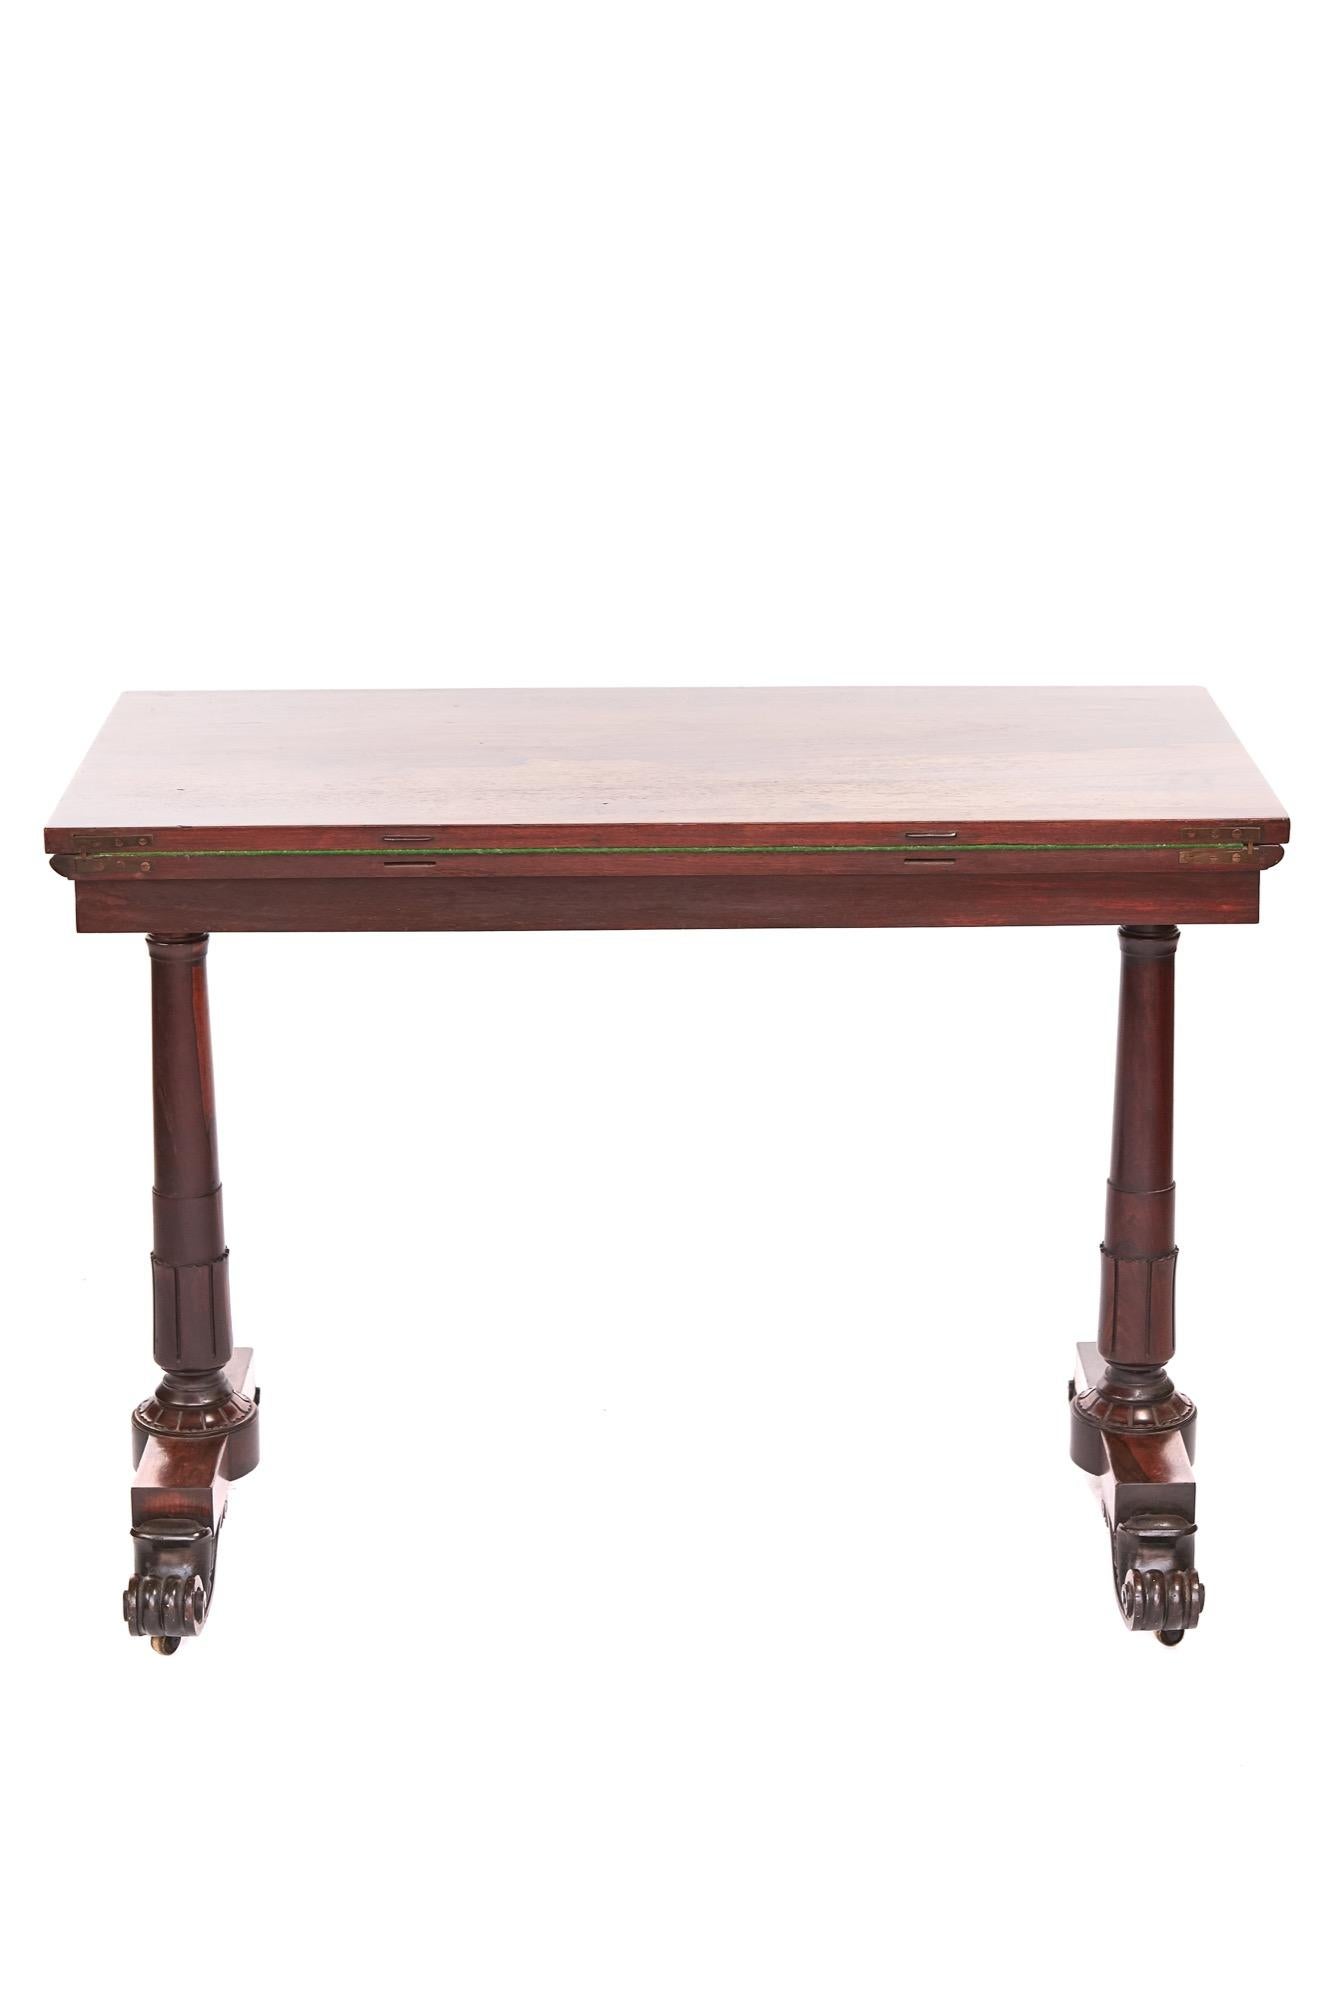 19th Century Unusual Regency Hardwood Card Table For Sale